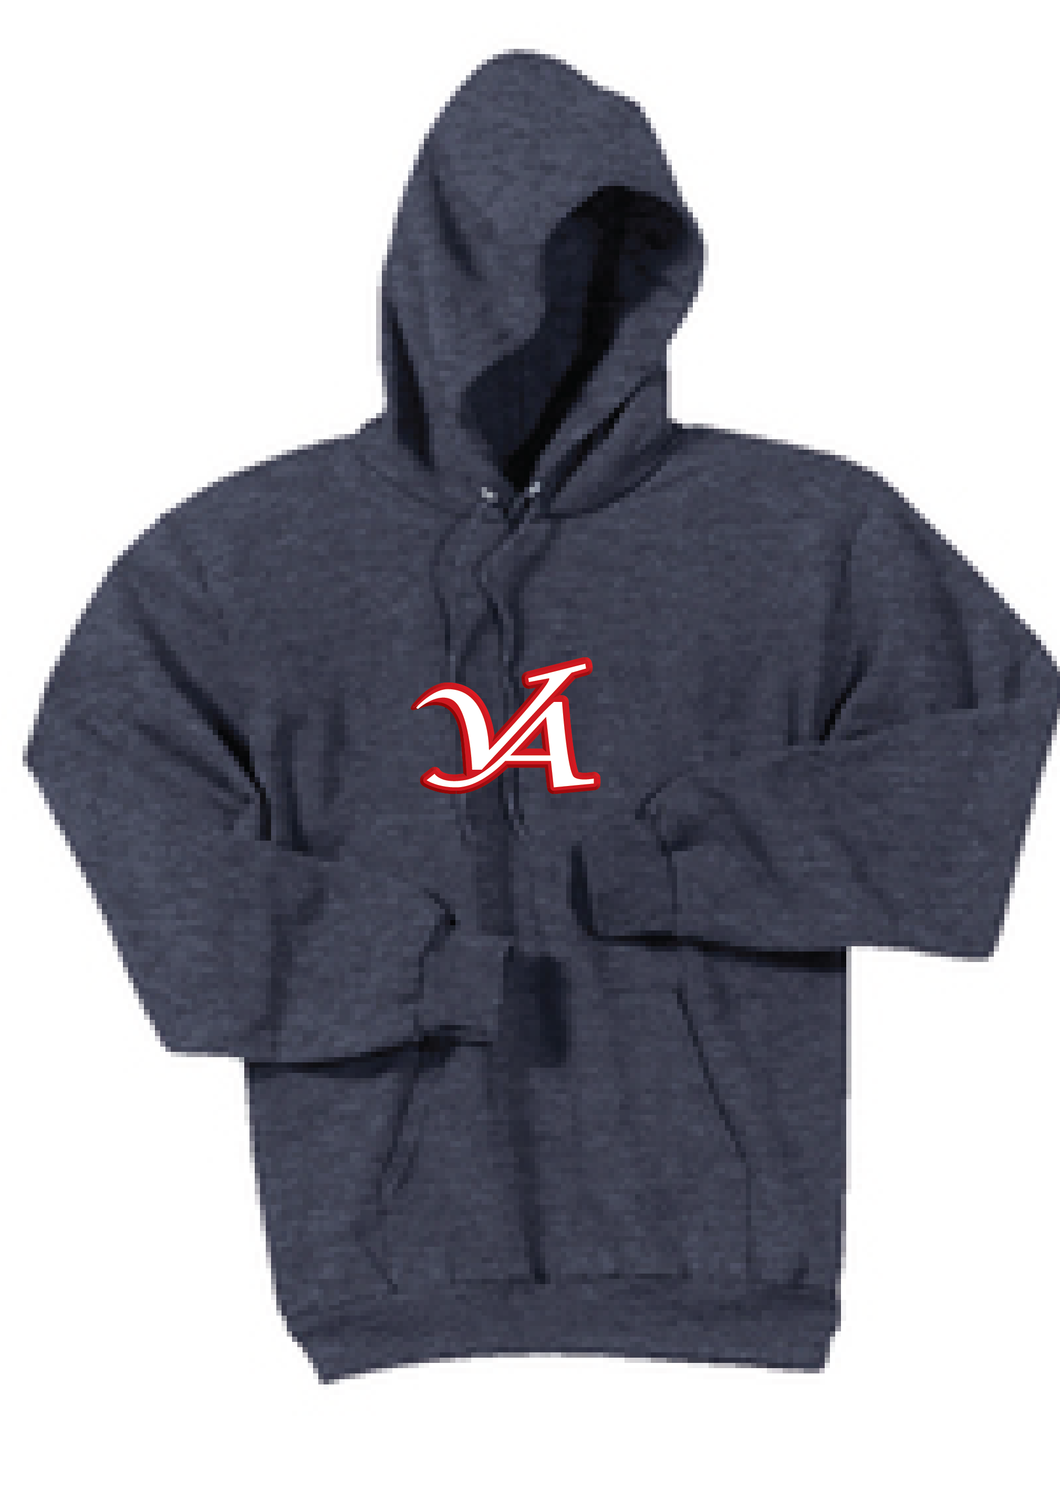 Fleece Hooded Sweatshirt / Navy / VA Aces - Fidgety